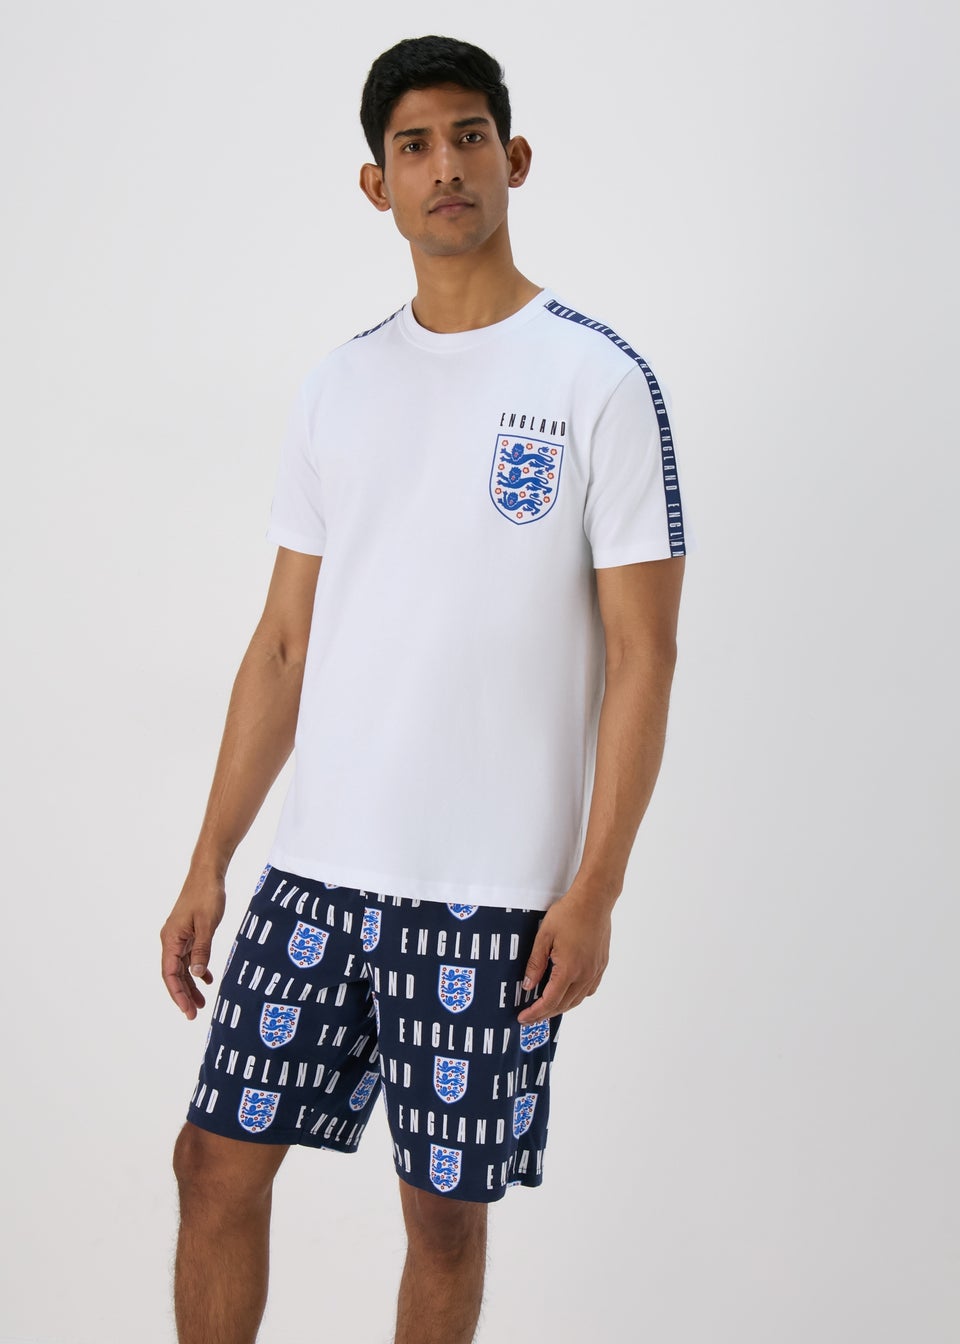 England White Football T-Shirt & Shorts Set